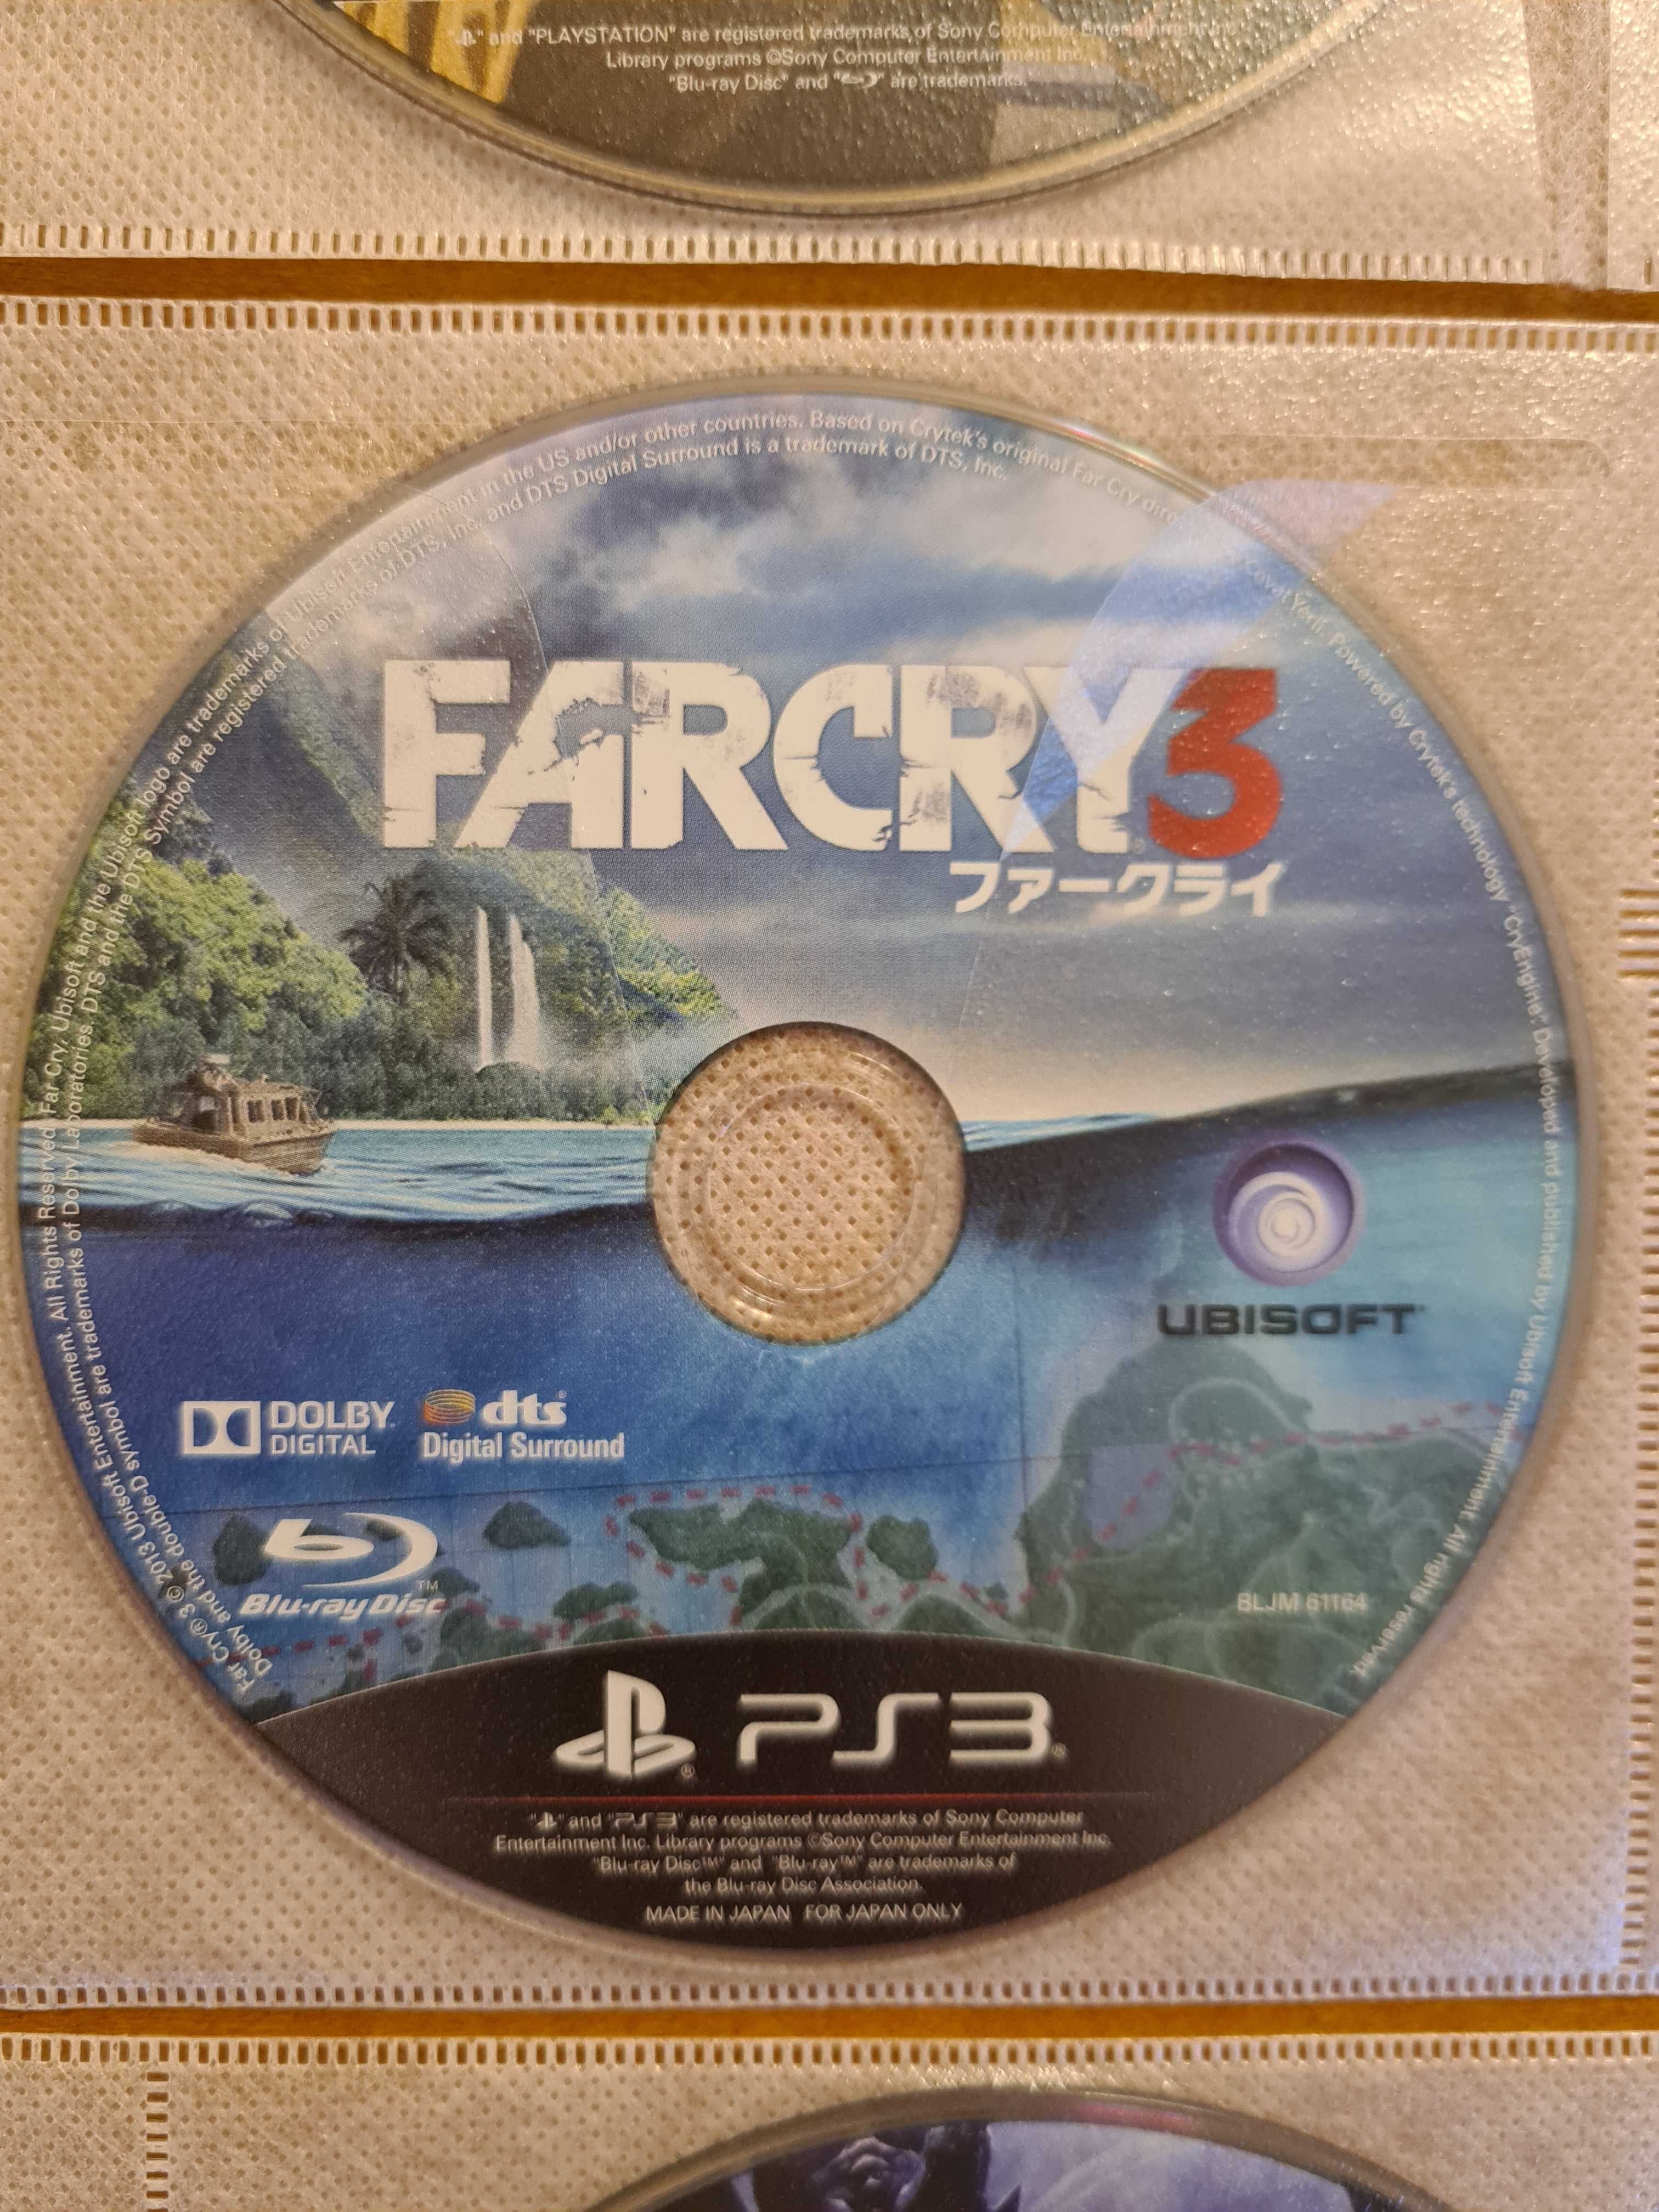 Gry FarCry, GTA IV, GTA V, Dragon's dogma, Uncharted playstation 3 PS3